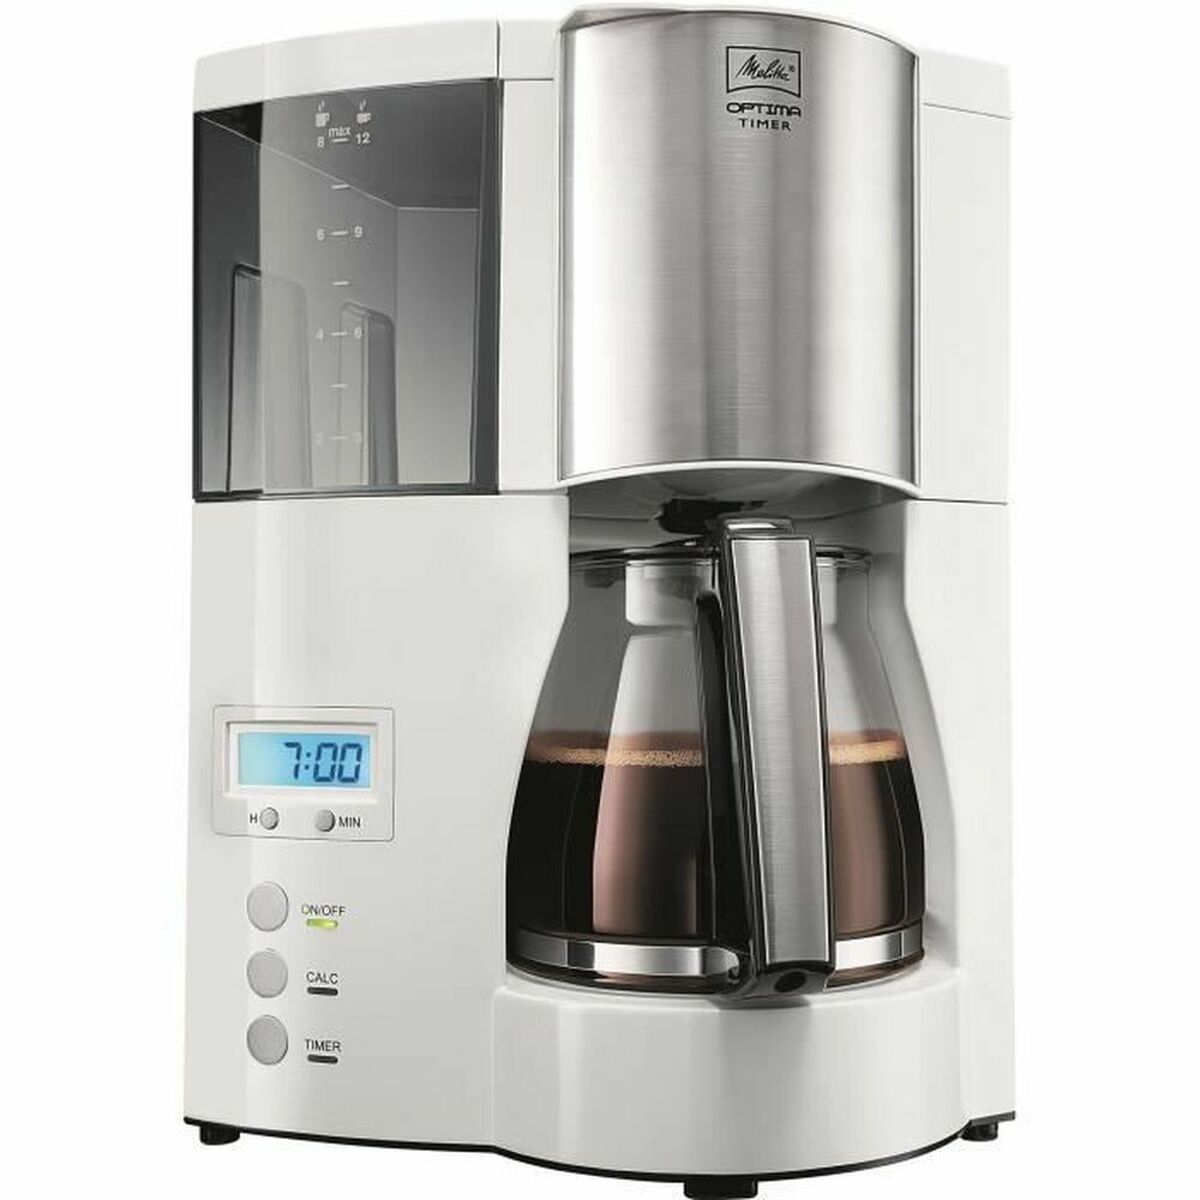 Filterkaffeemaschine Melitta Optima Timer 850 W Weiß 850 W - CA International  